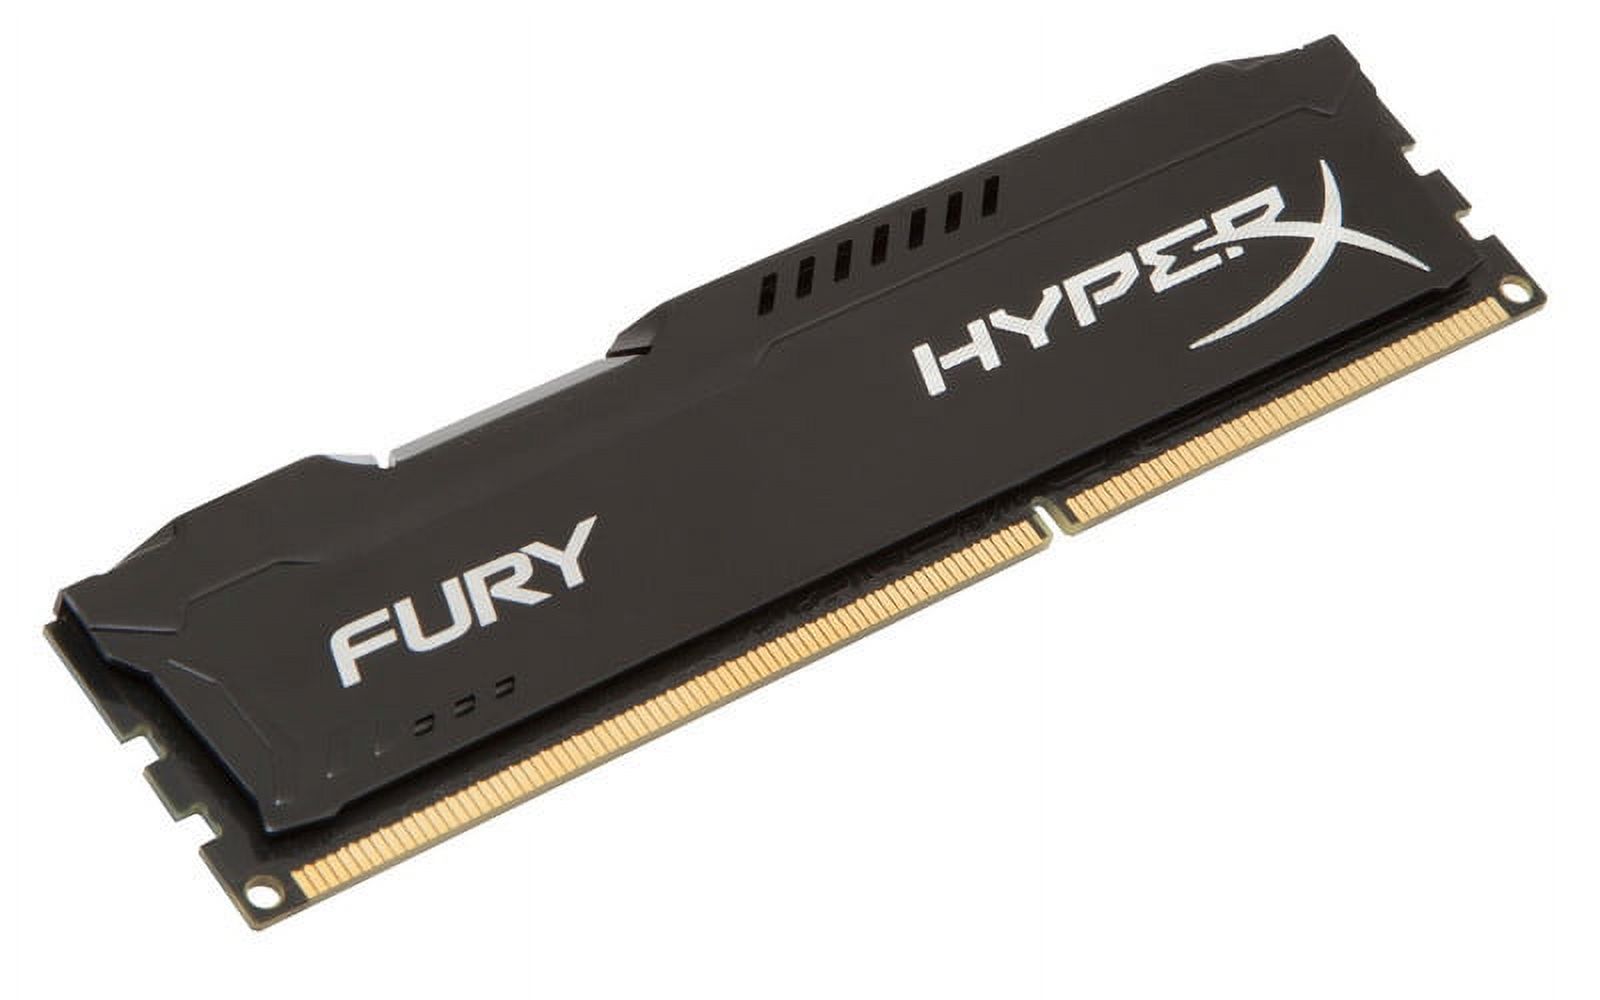 HyperX FURY Memory Black 8GB 1600MHz DDR3 CL10 DIMM HX316C10FB/8 - image 1 of 3